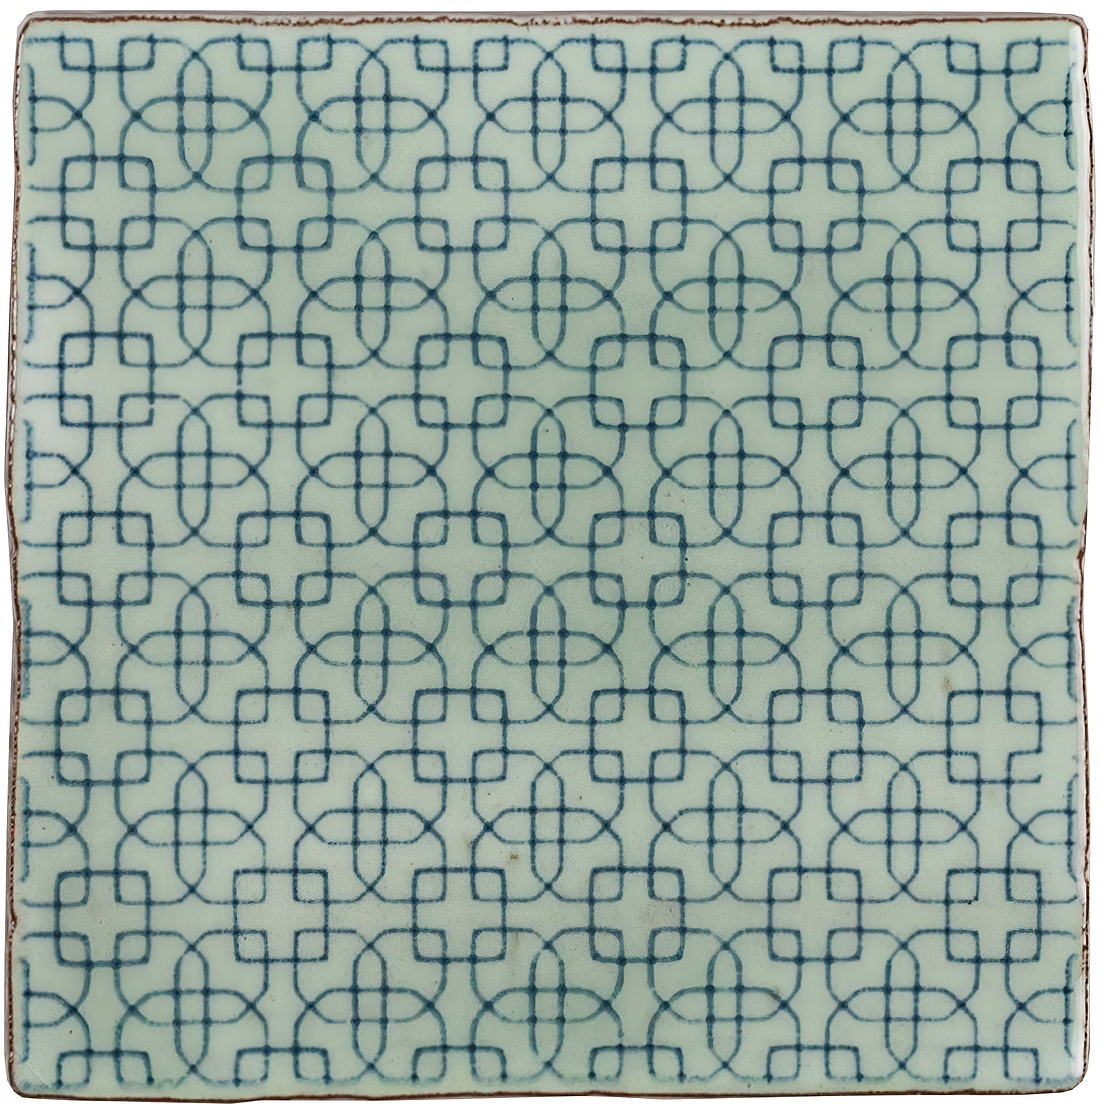 Manoir Maroc Mint - Hyperion Tiles